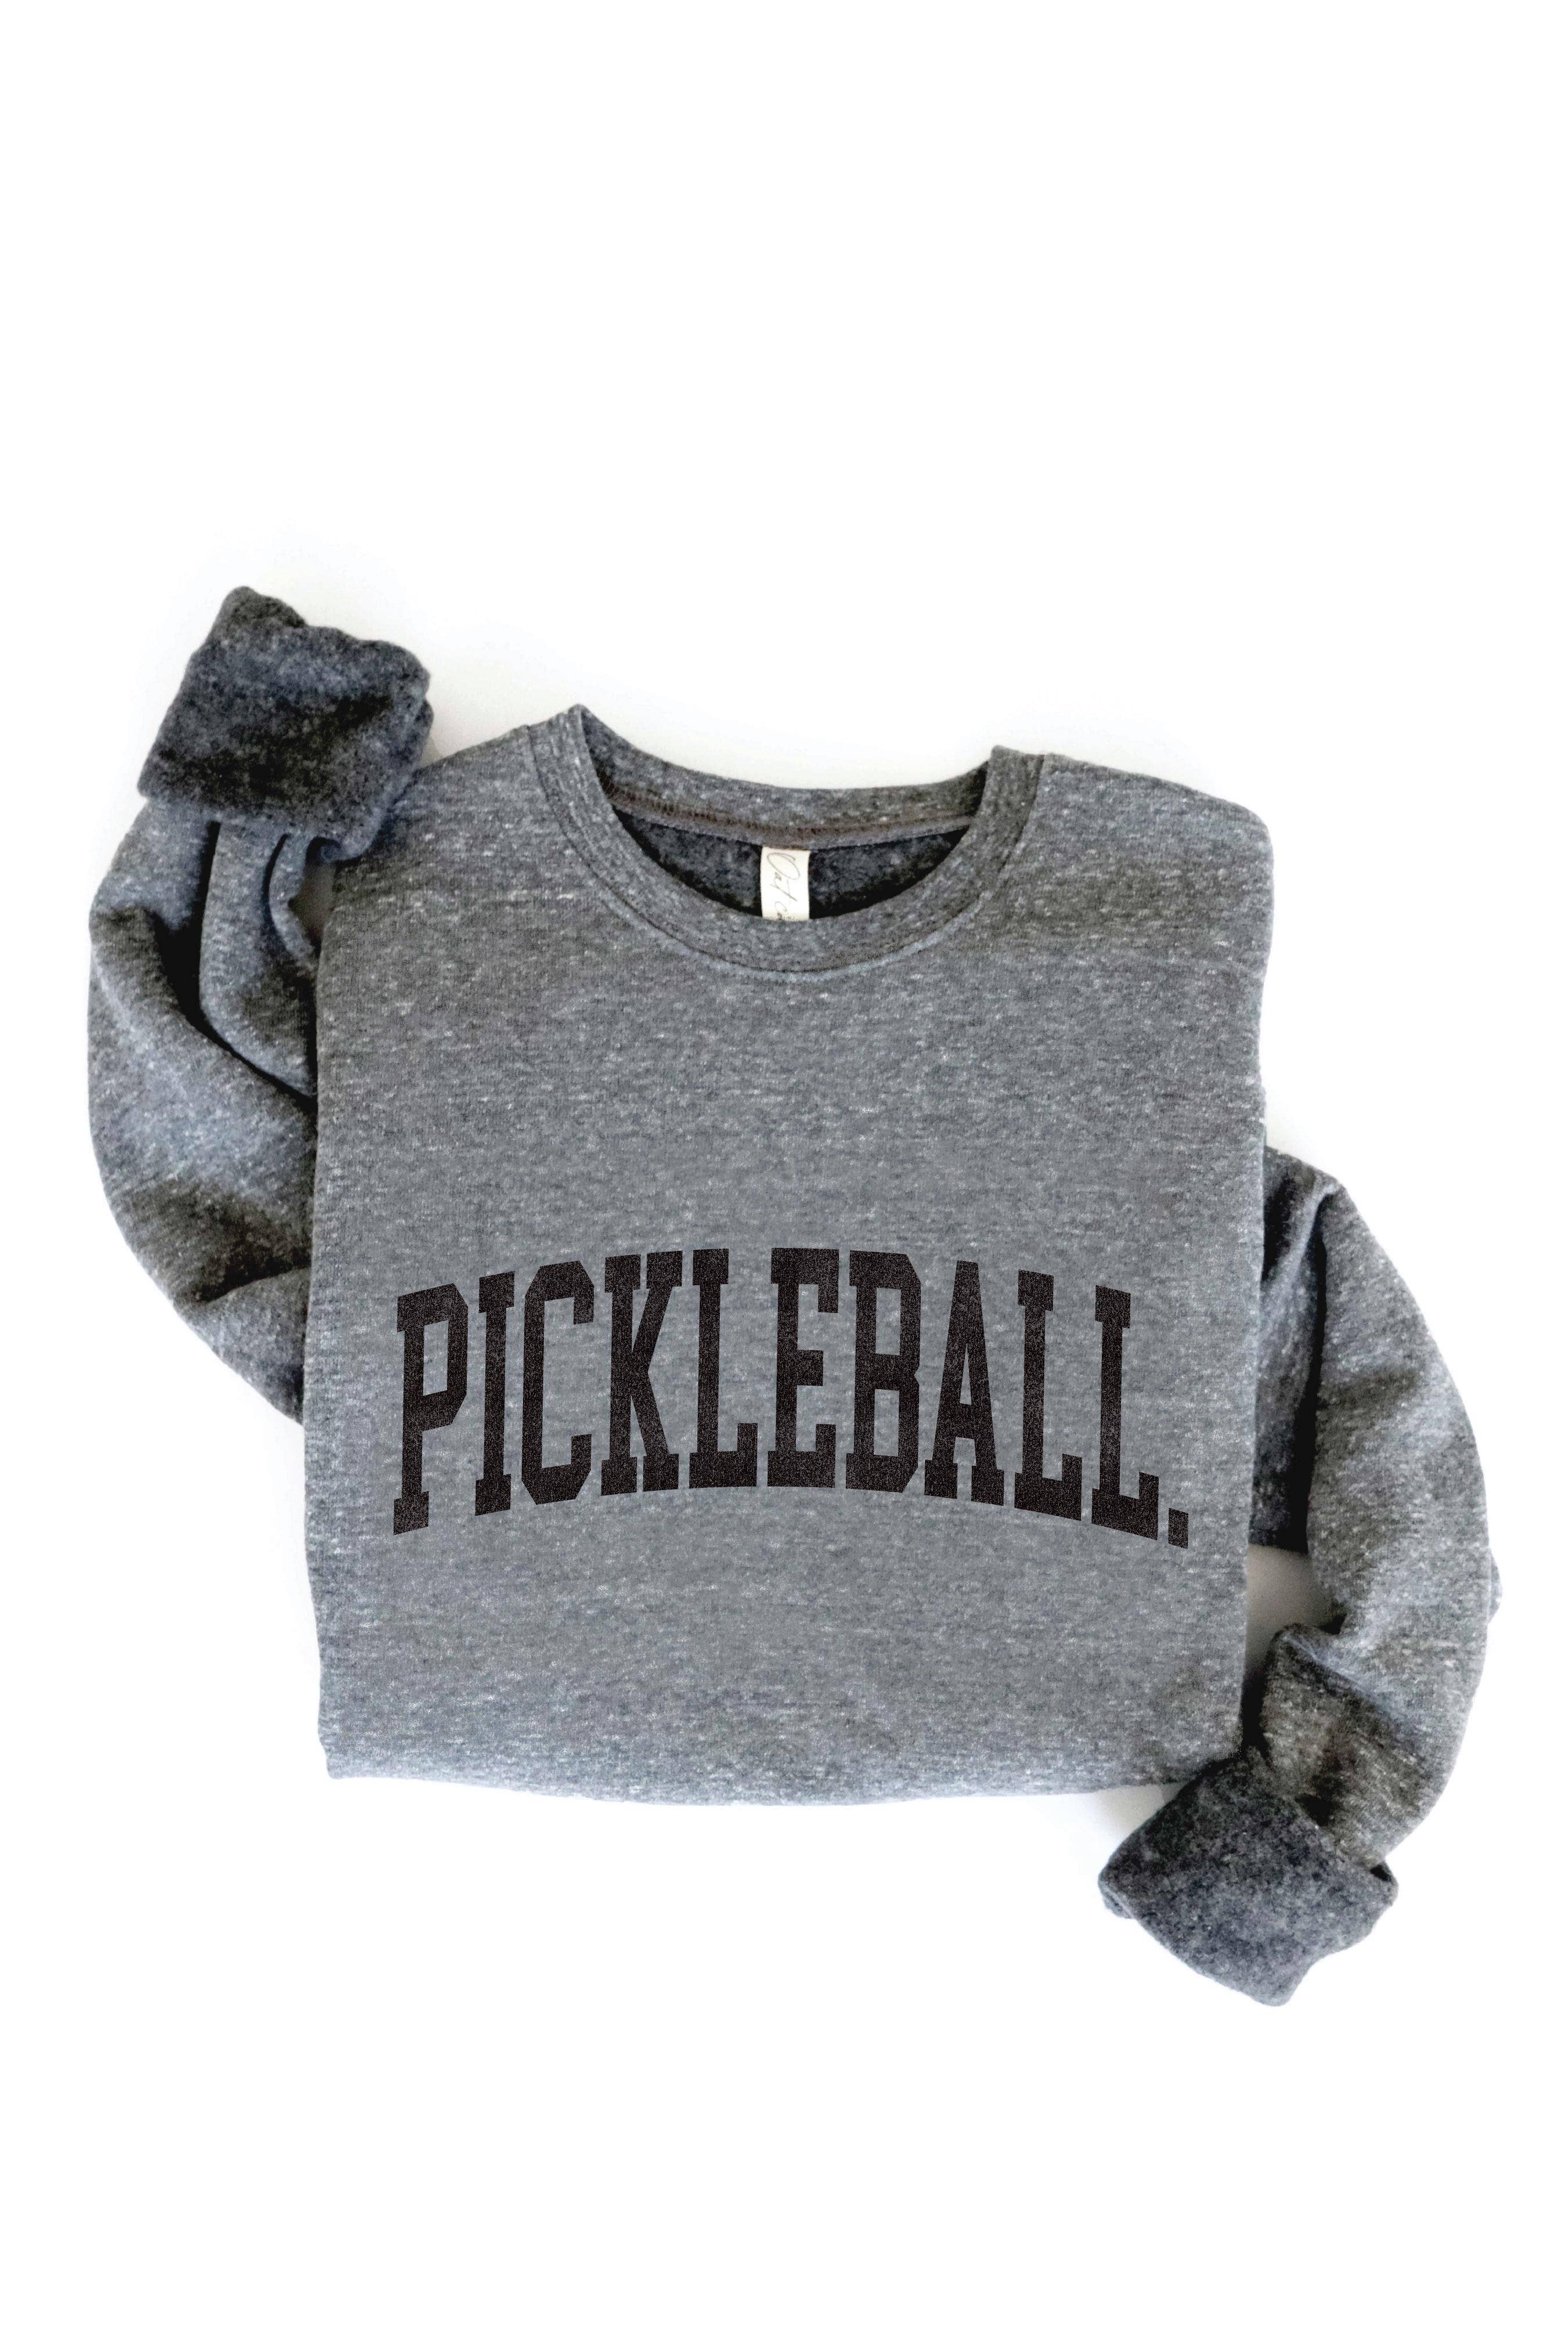 OAT COLLECTIVE - PICKLEBALL Graphic Sweatshirt: XL / DARK GREY